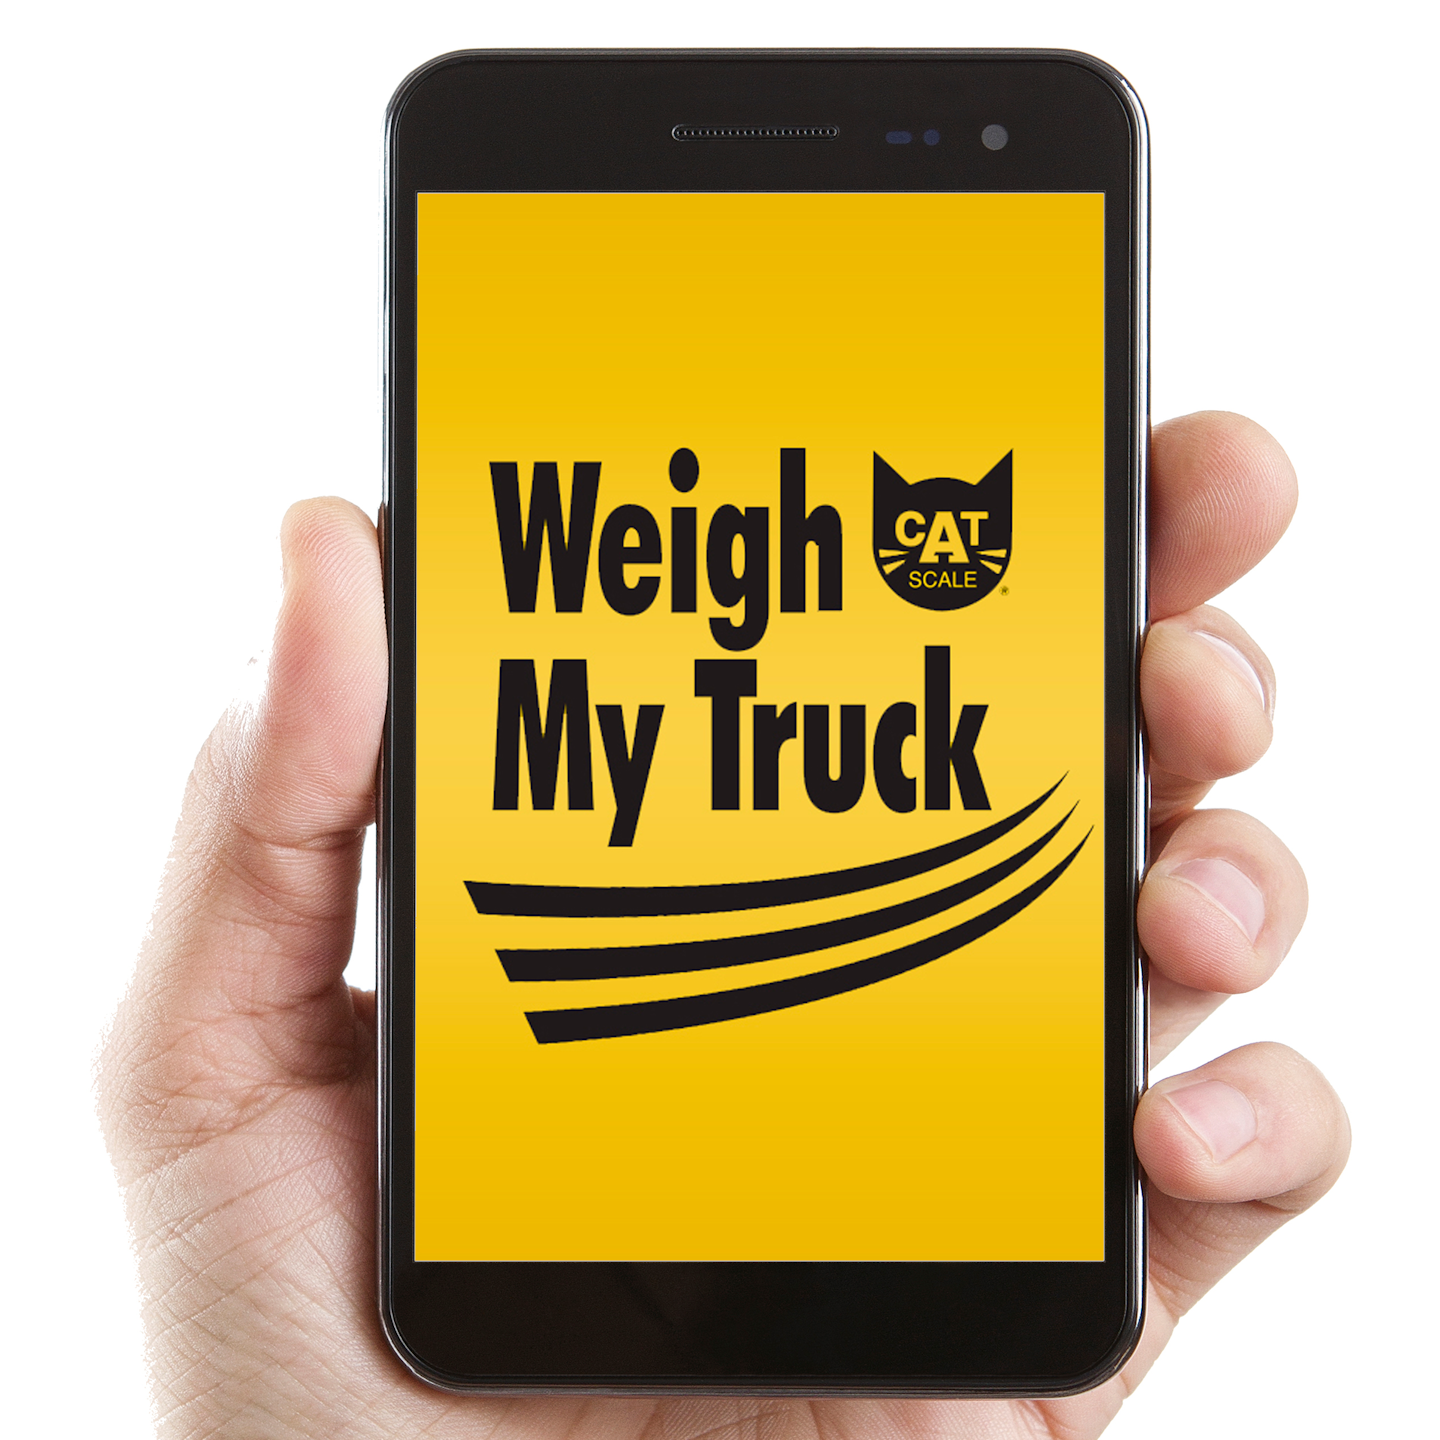 052120 Cat Scale Weigh My Truck App